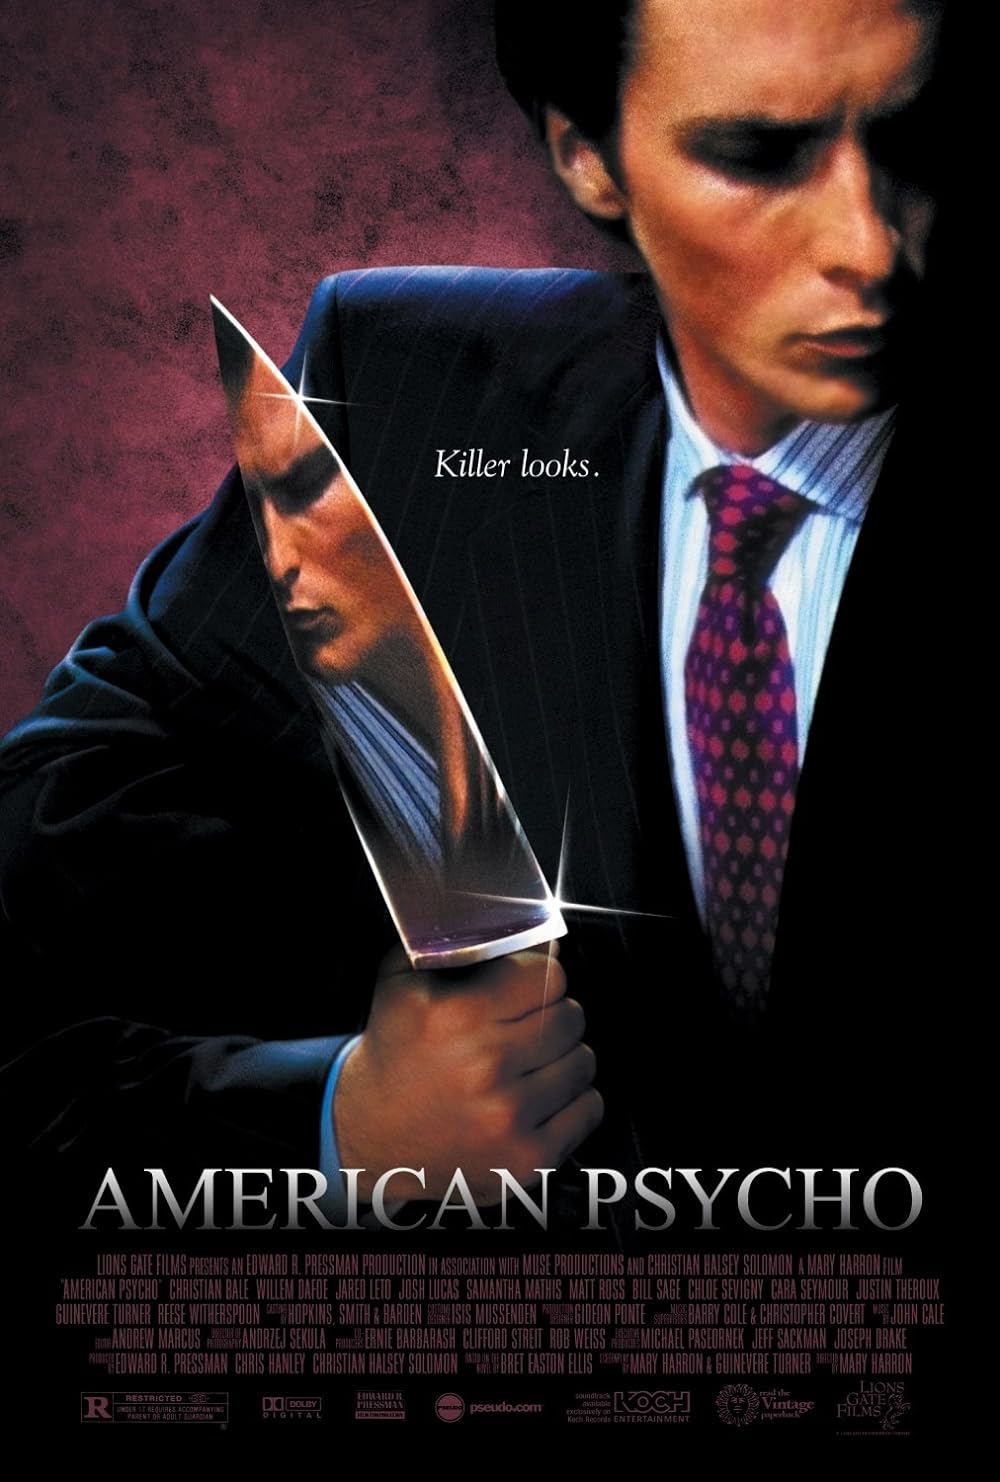 Patrick Bateman; American Psycho 
(Provided by Lionsgate Films)